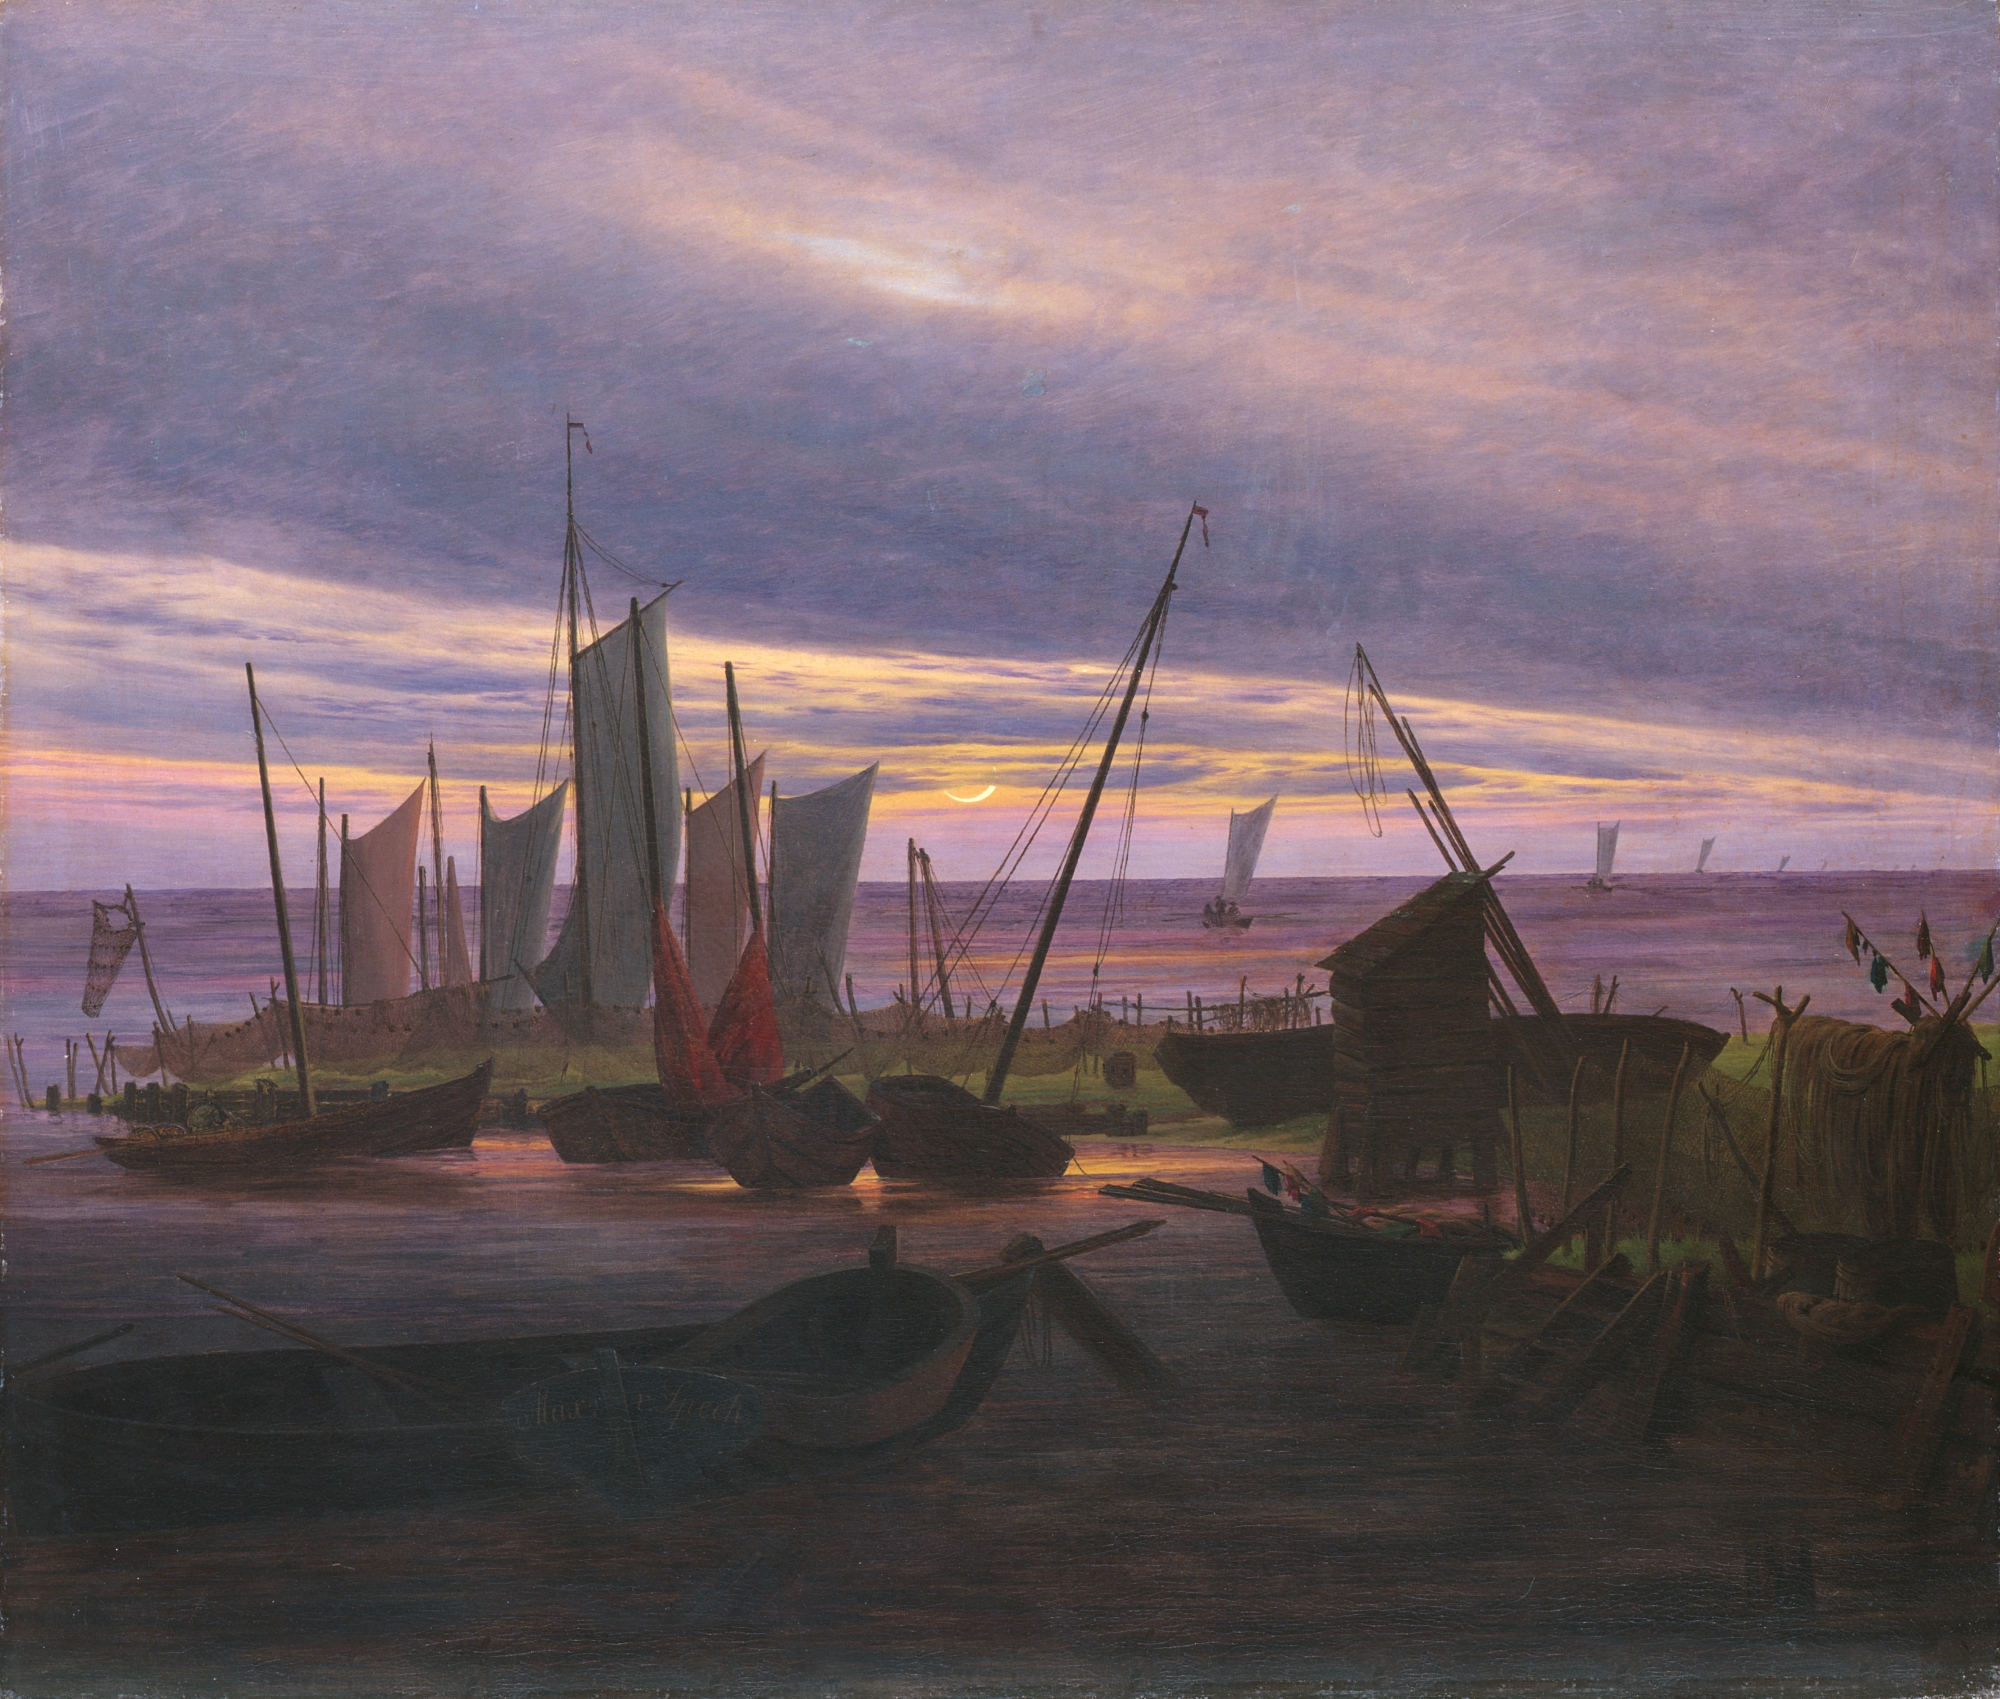 Hajók a kikötőben, este by Caspar David Friedrich - 1828 - 76,5 x 88,2 cm 